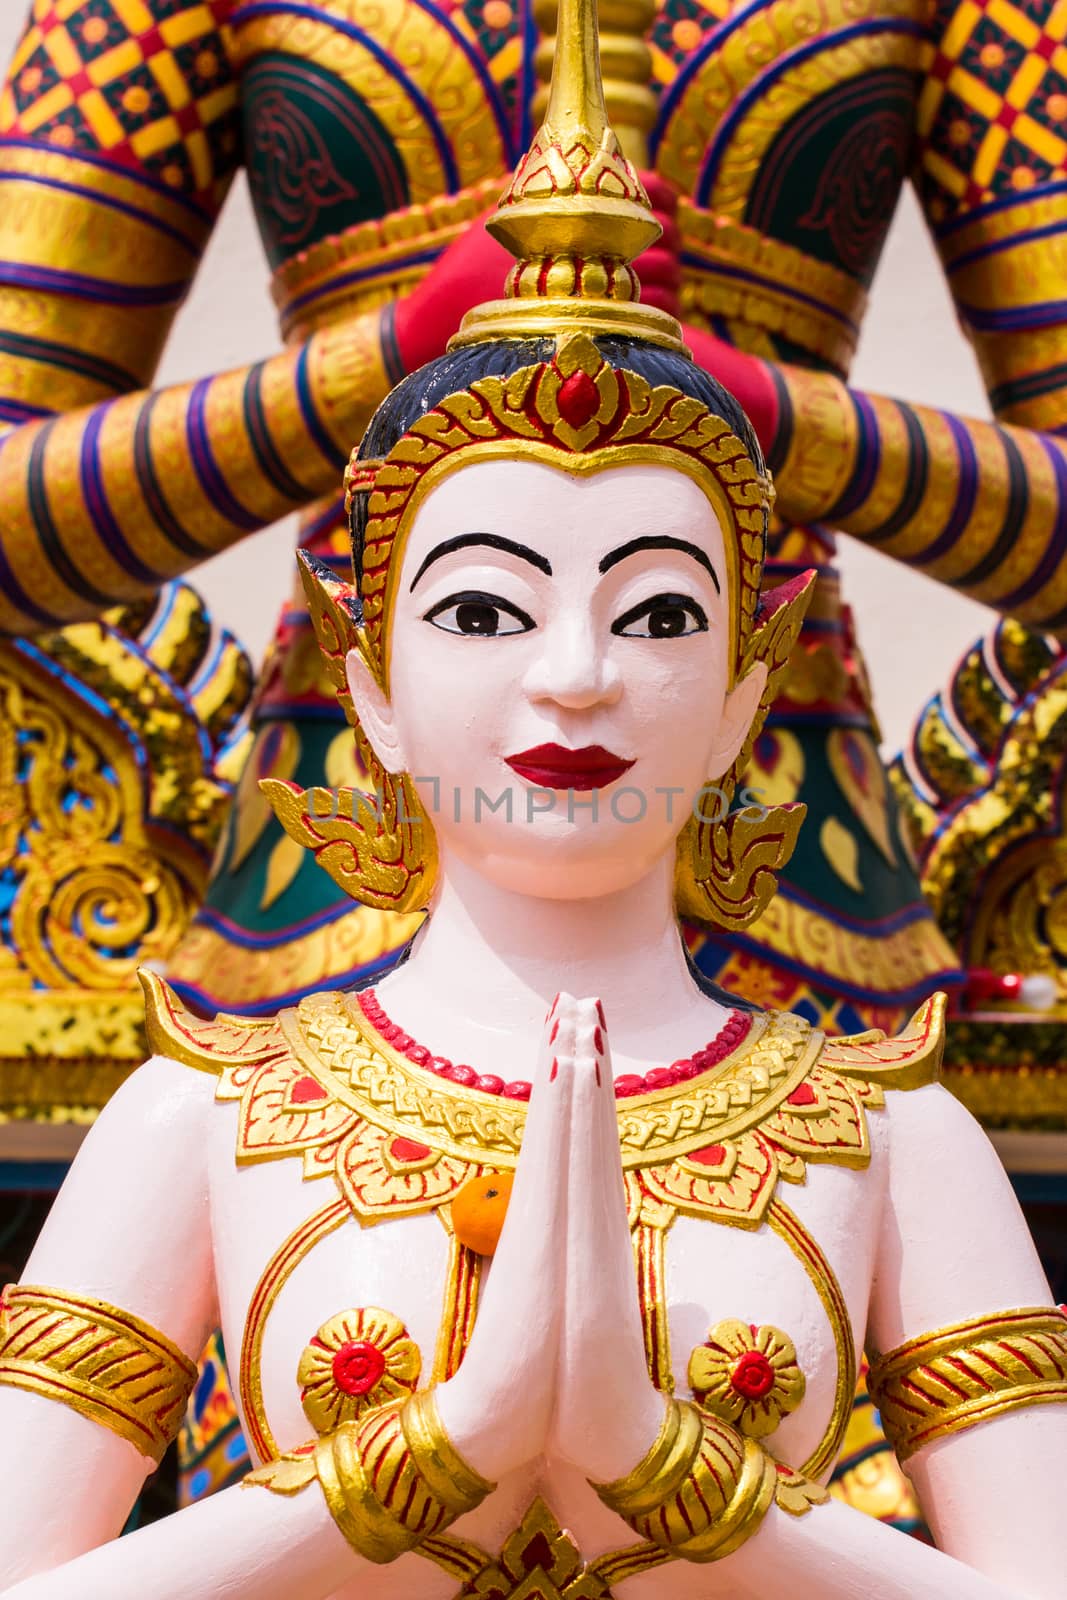 The figure of deva Statue is Wat Chaiyamangalaram (Thai’s Tample) in Penang, Malaysia.